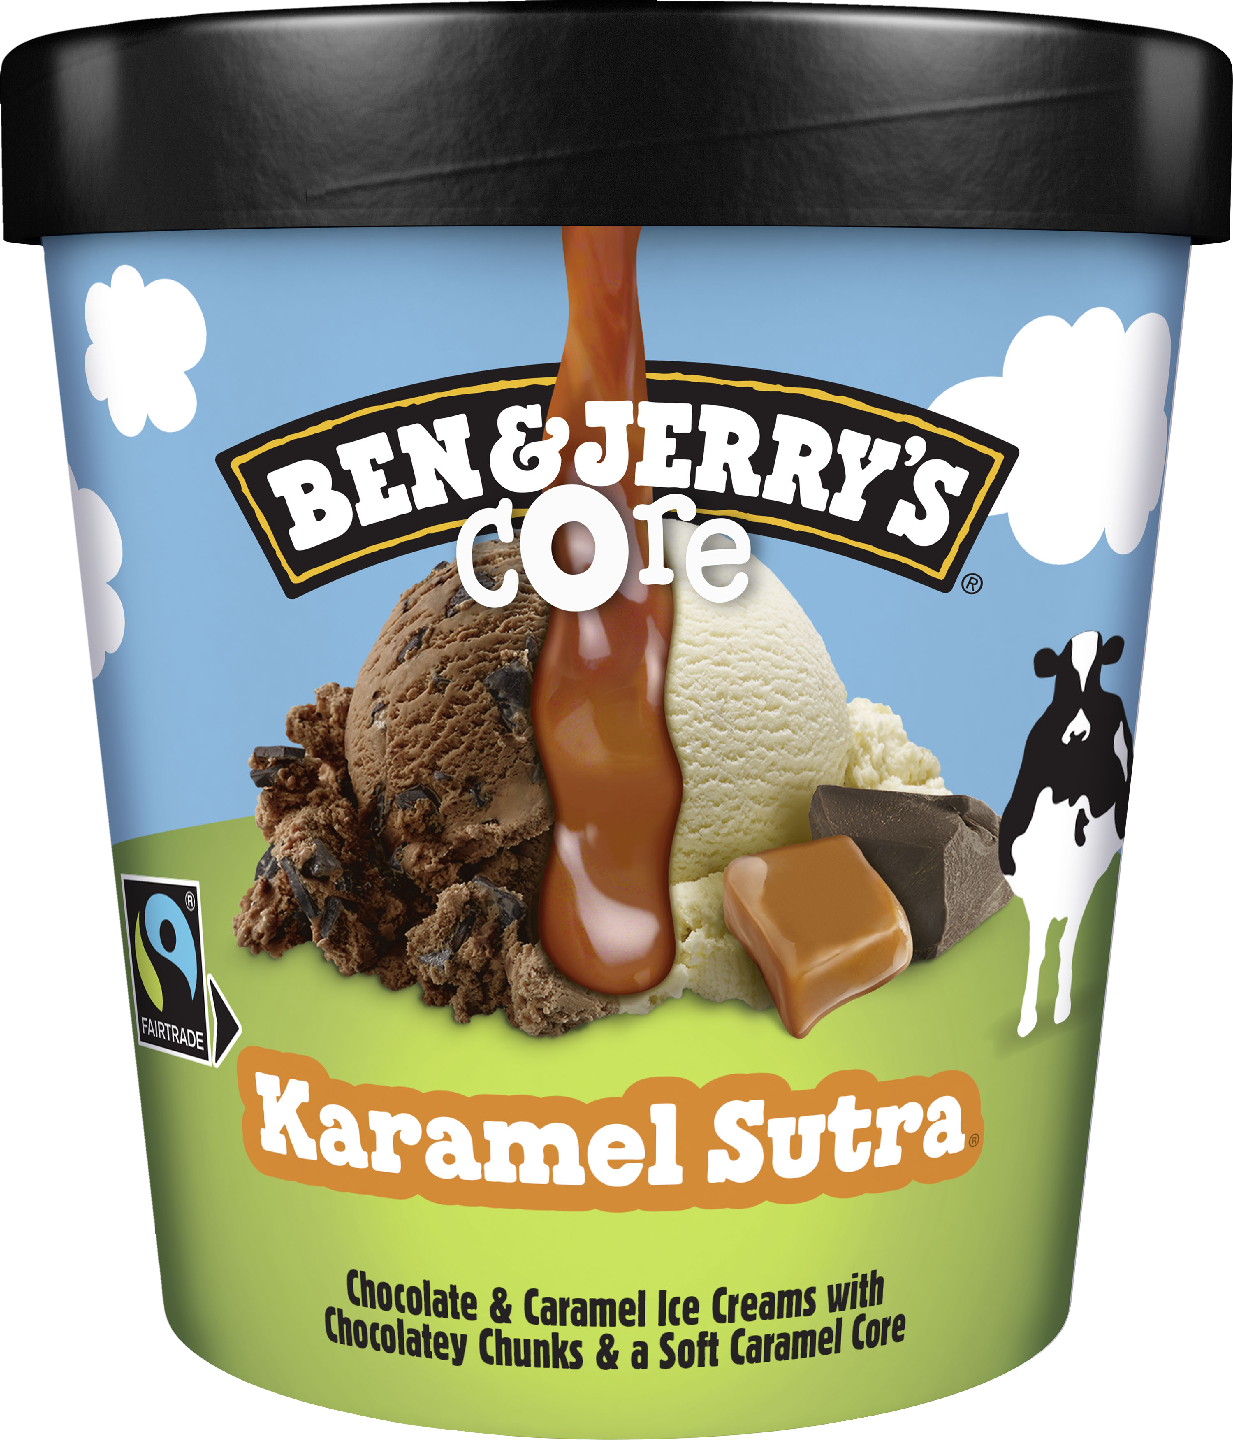 Ben & Jerry's jäätelö 465ml  Karamel Sutra Core